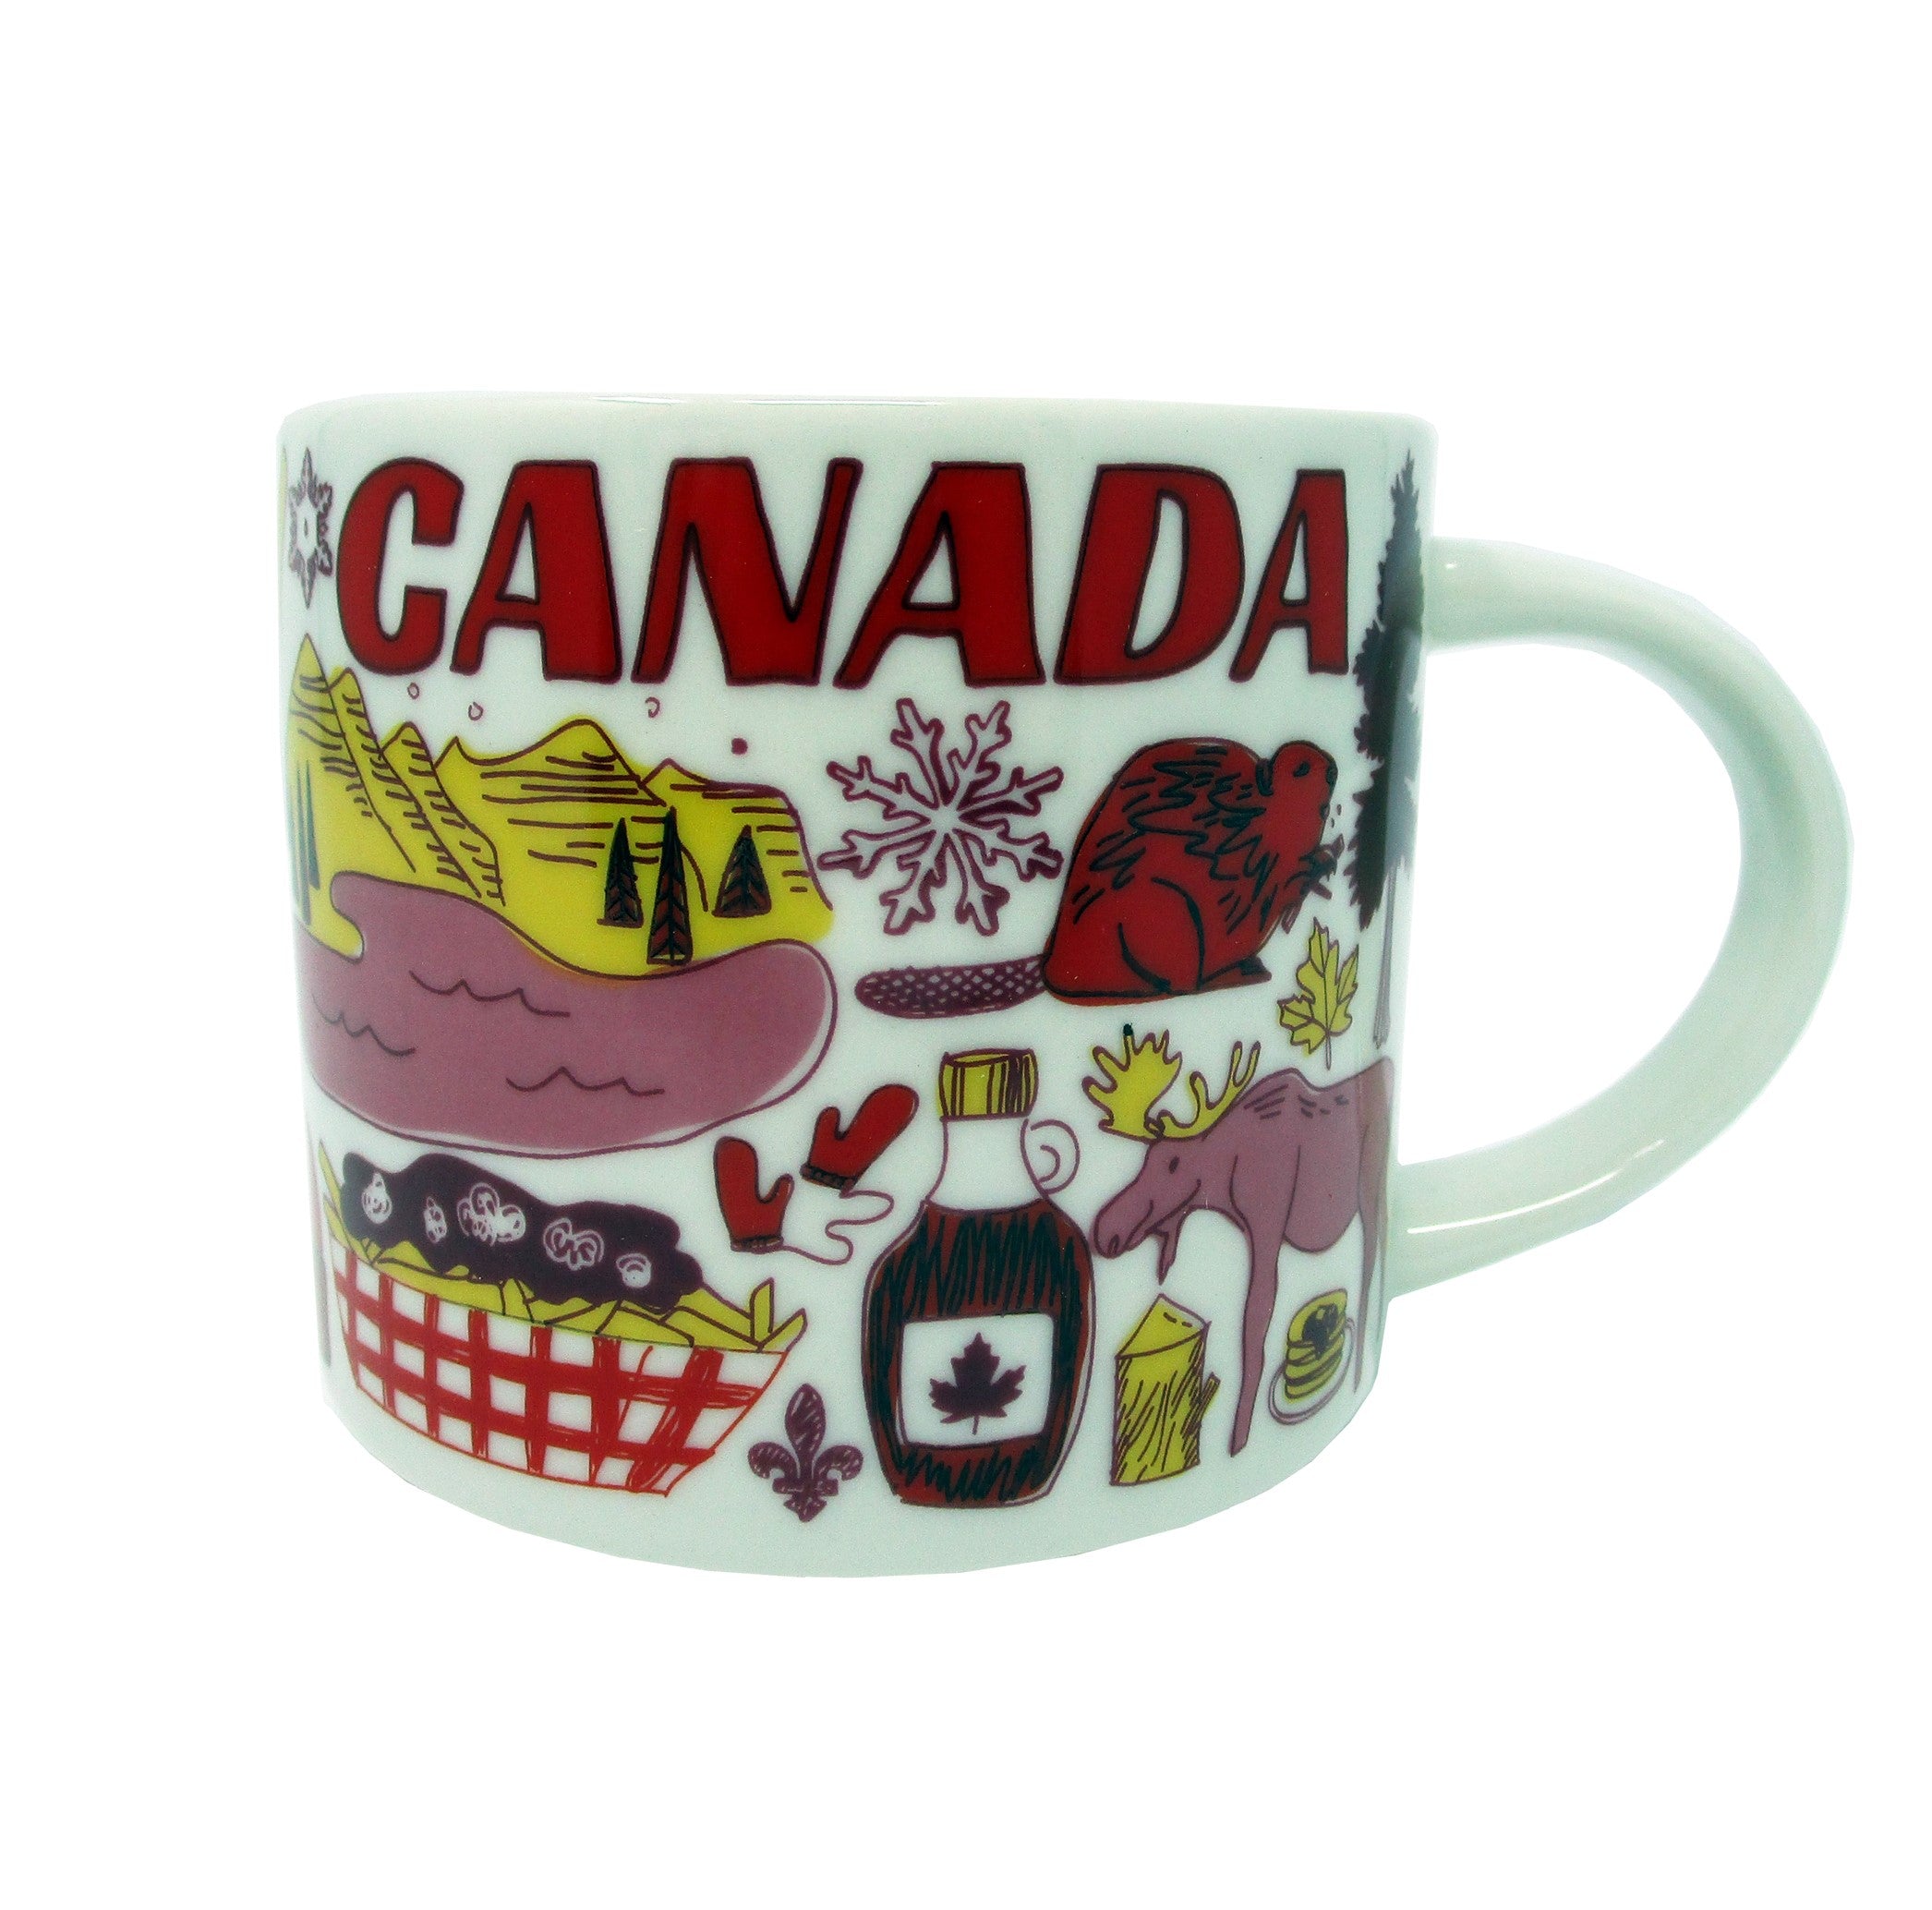 Starbucks Been There Series - Canada Mug, 14 Oz